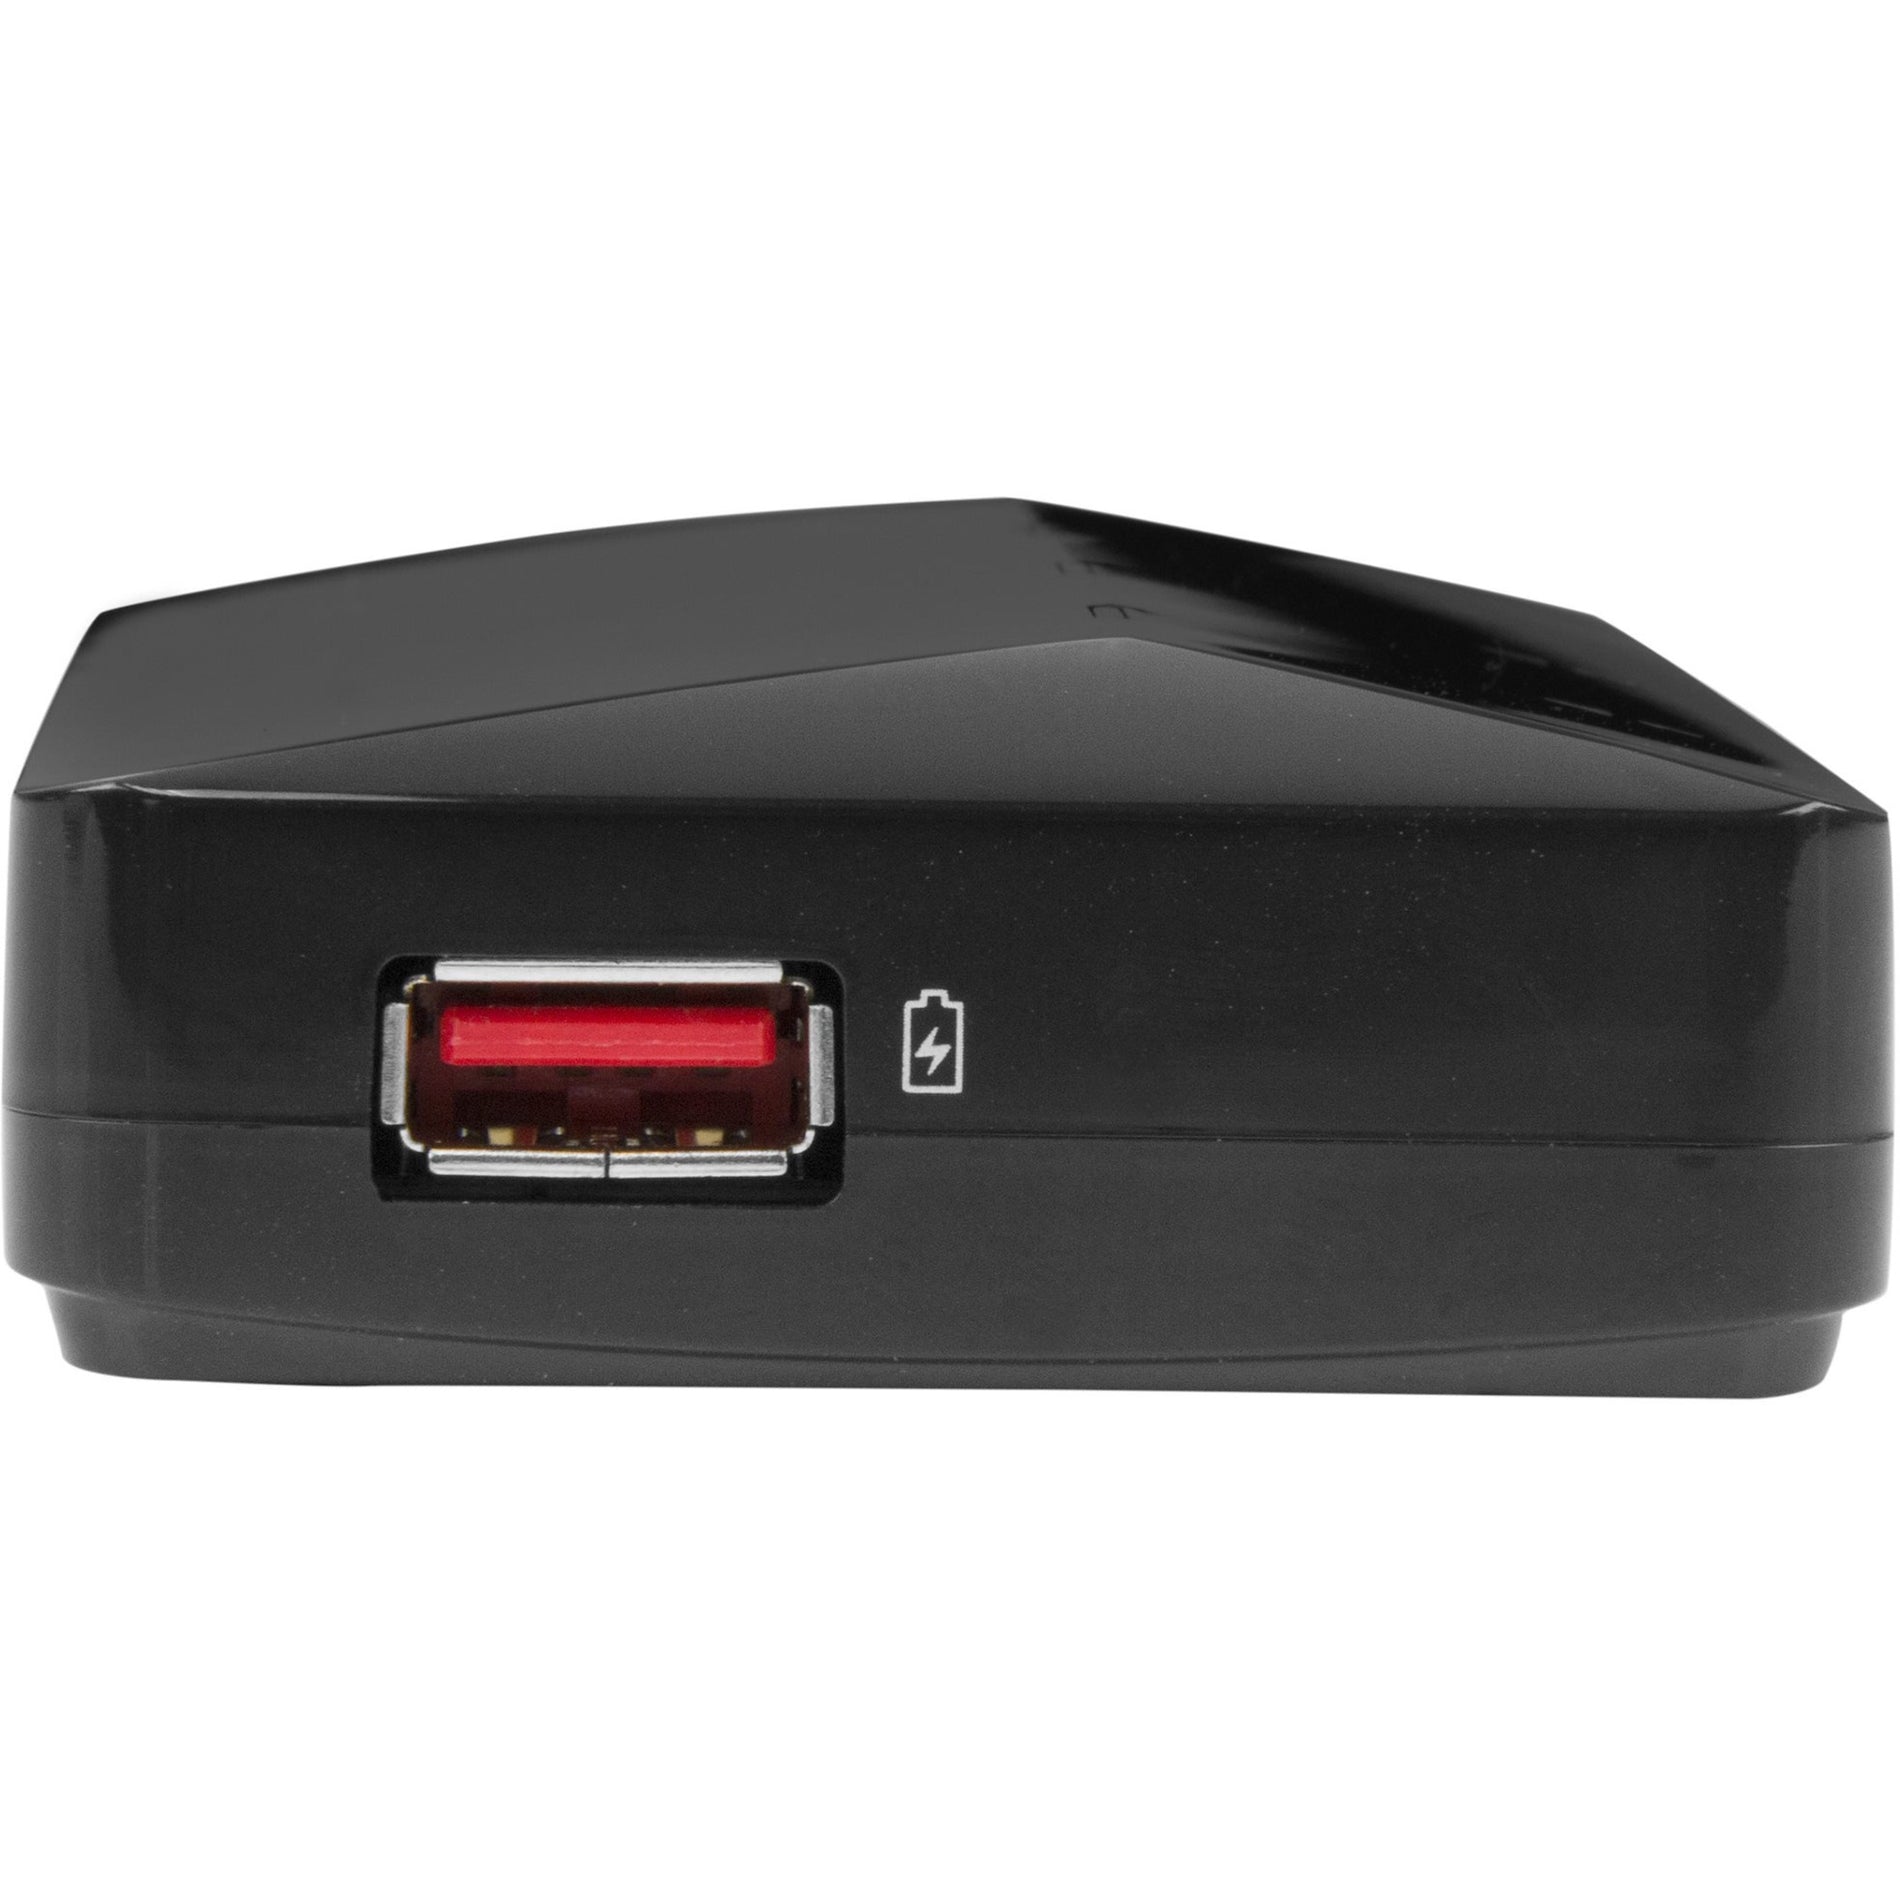 StarTech.com ST53004U1C 4-Port USB 3.0 Hub plus Dedicated Charging Port - Fast-Charging Station, Desktop USB Hub